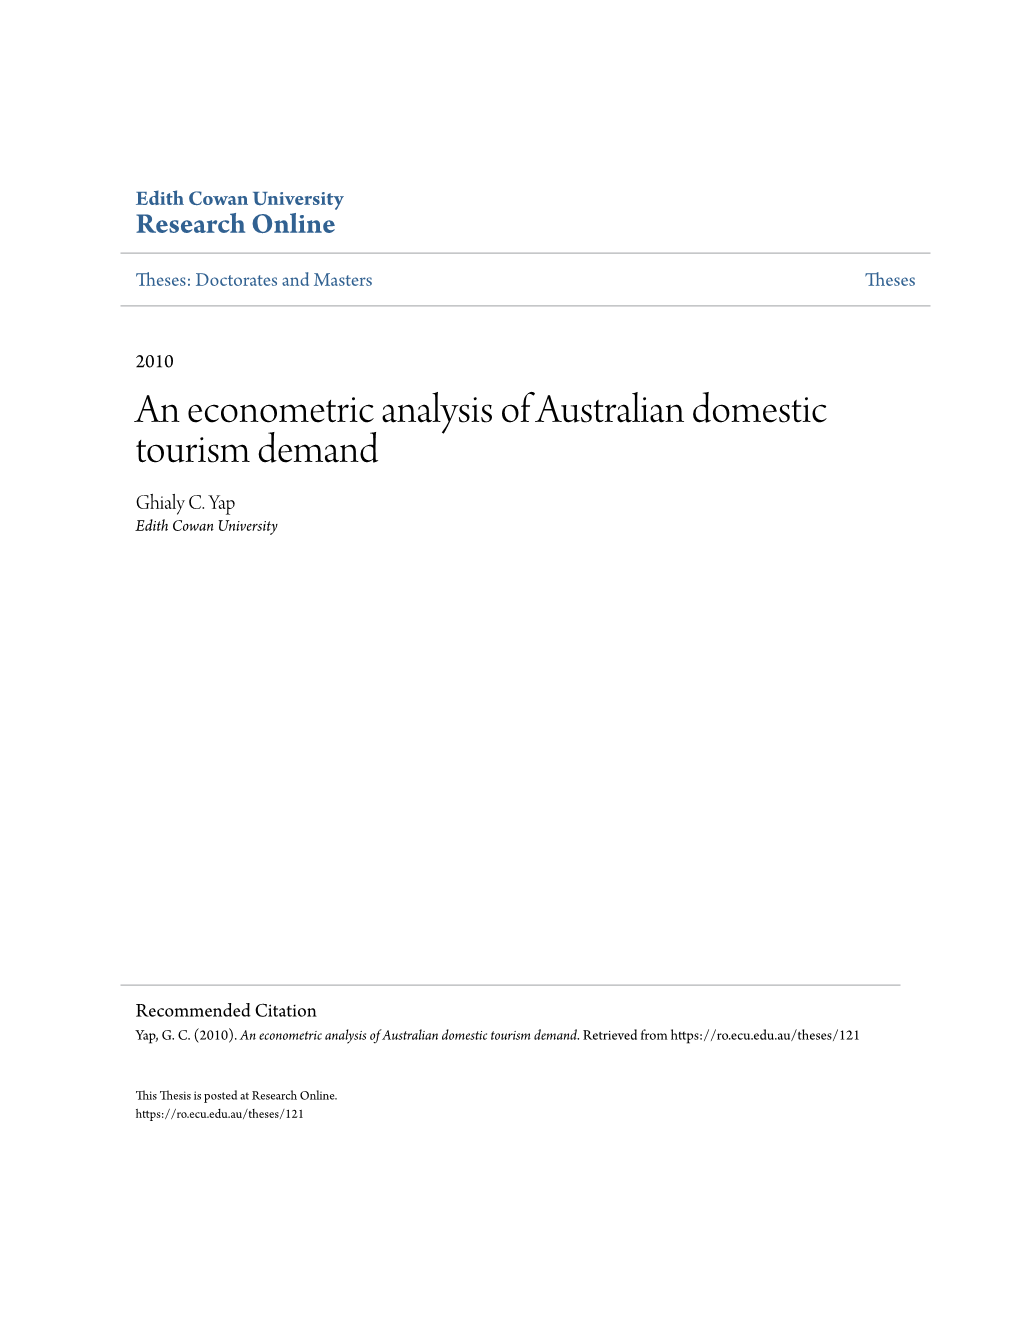 An Econometric Analysis of Australian Domestic Tourism Demand Ghialy C